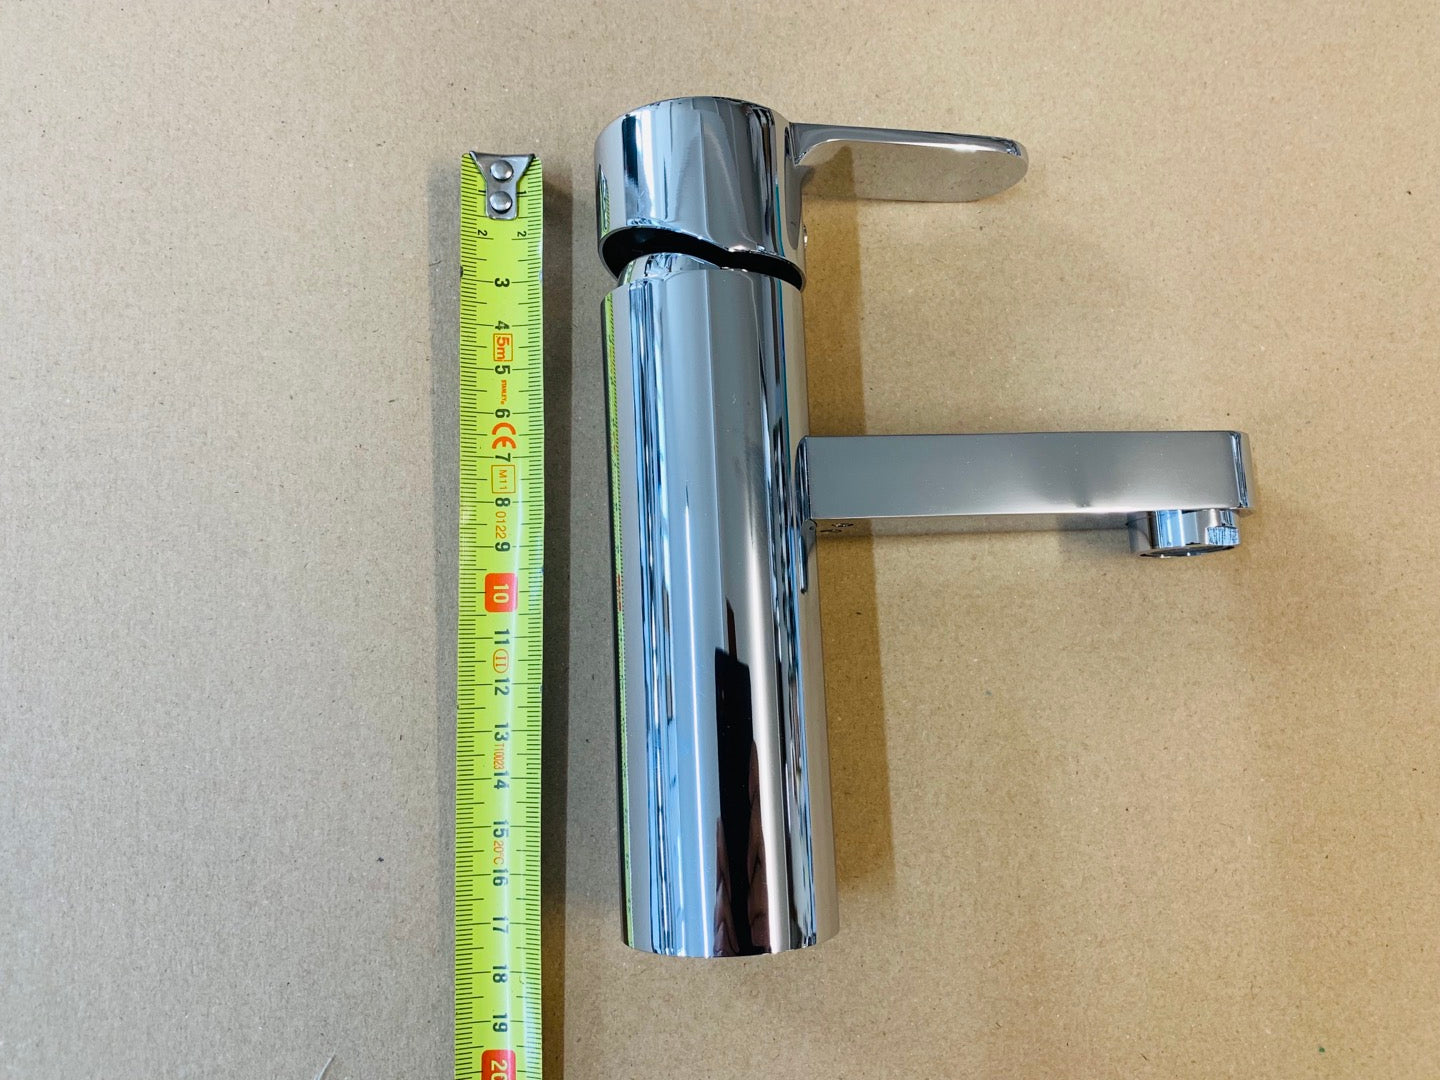 [T112] Basin tap -- Good value (Watermark)